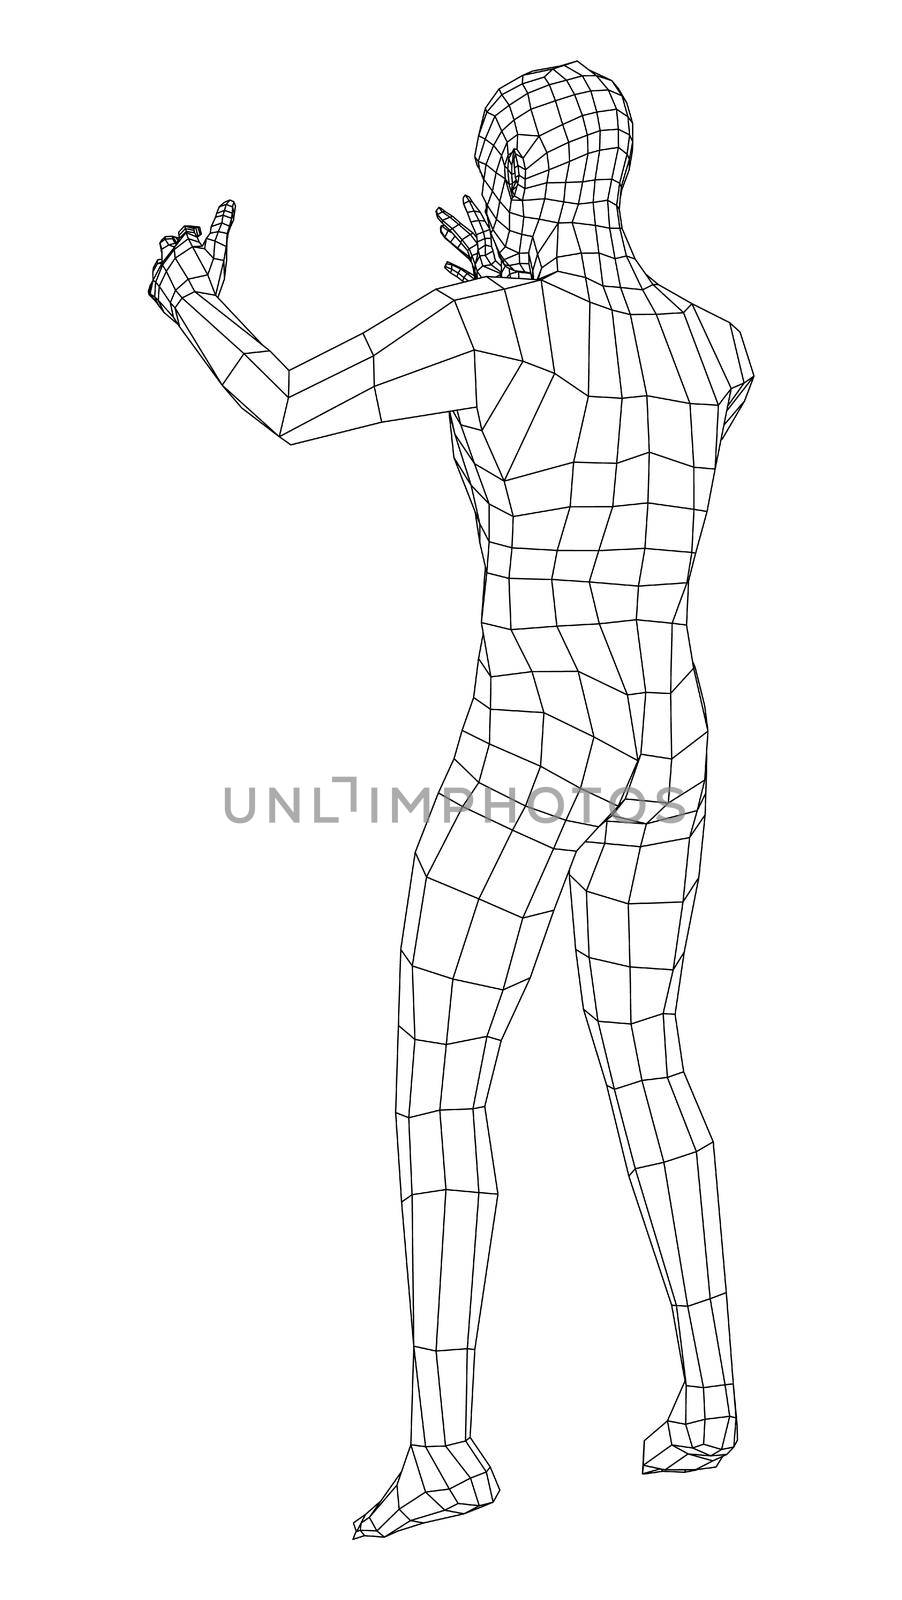 Wireframe jumping man. 3d illustration. Man in jumping pose